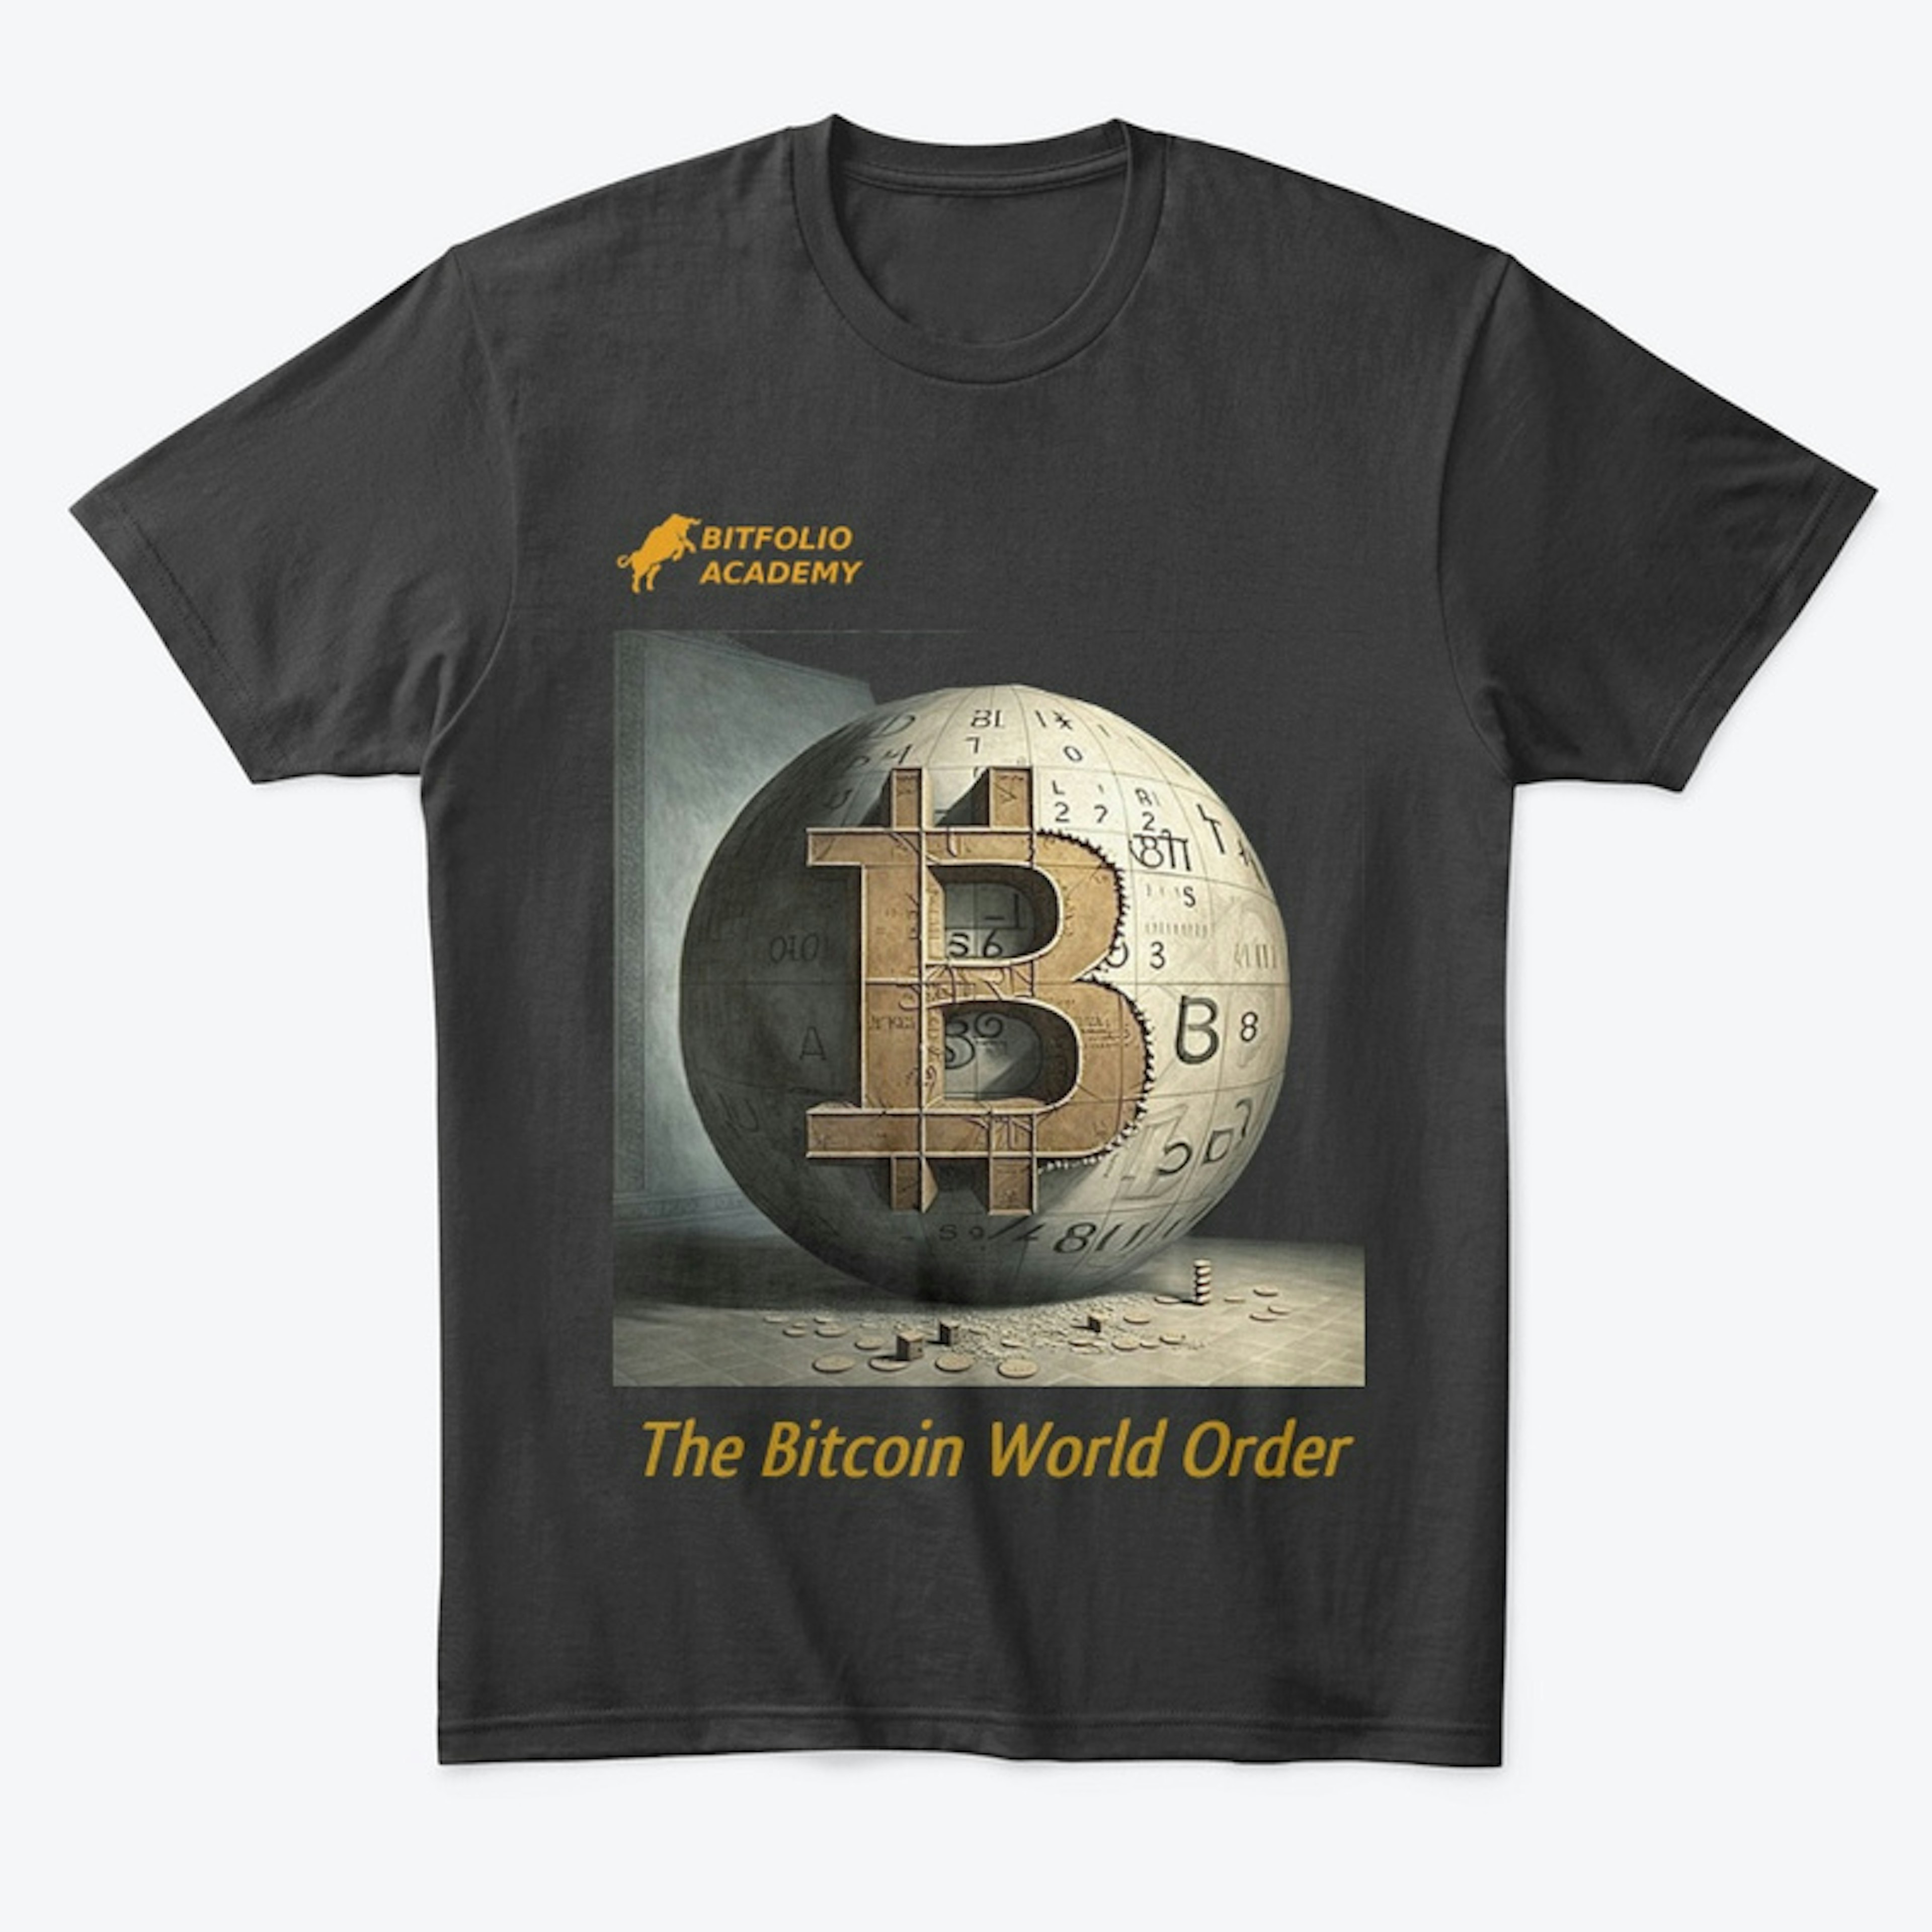 Join the Bitcoin World Order